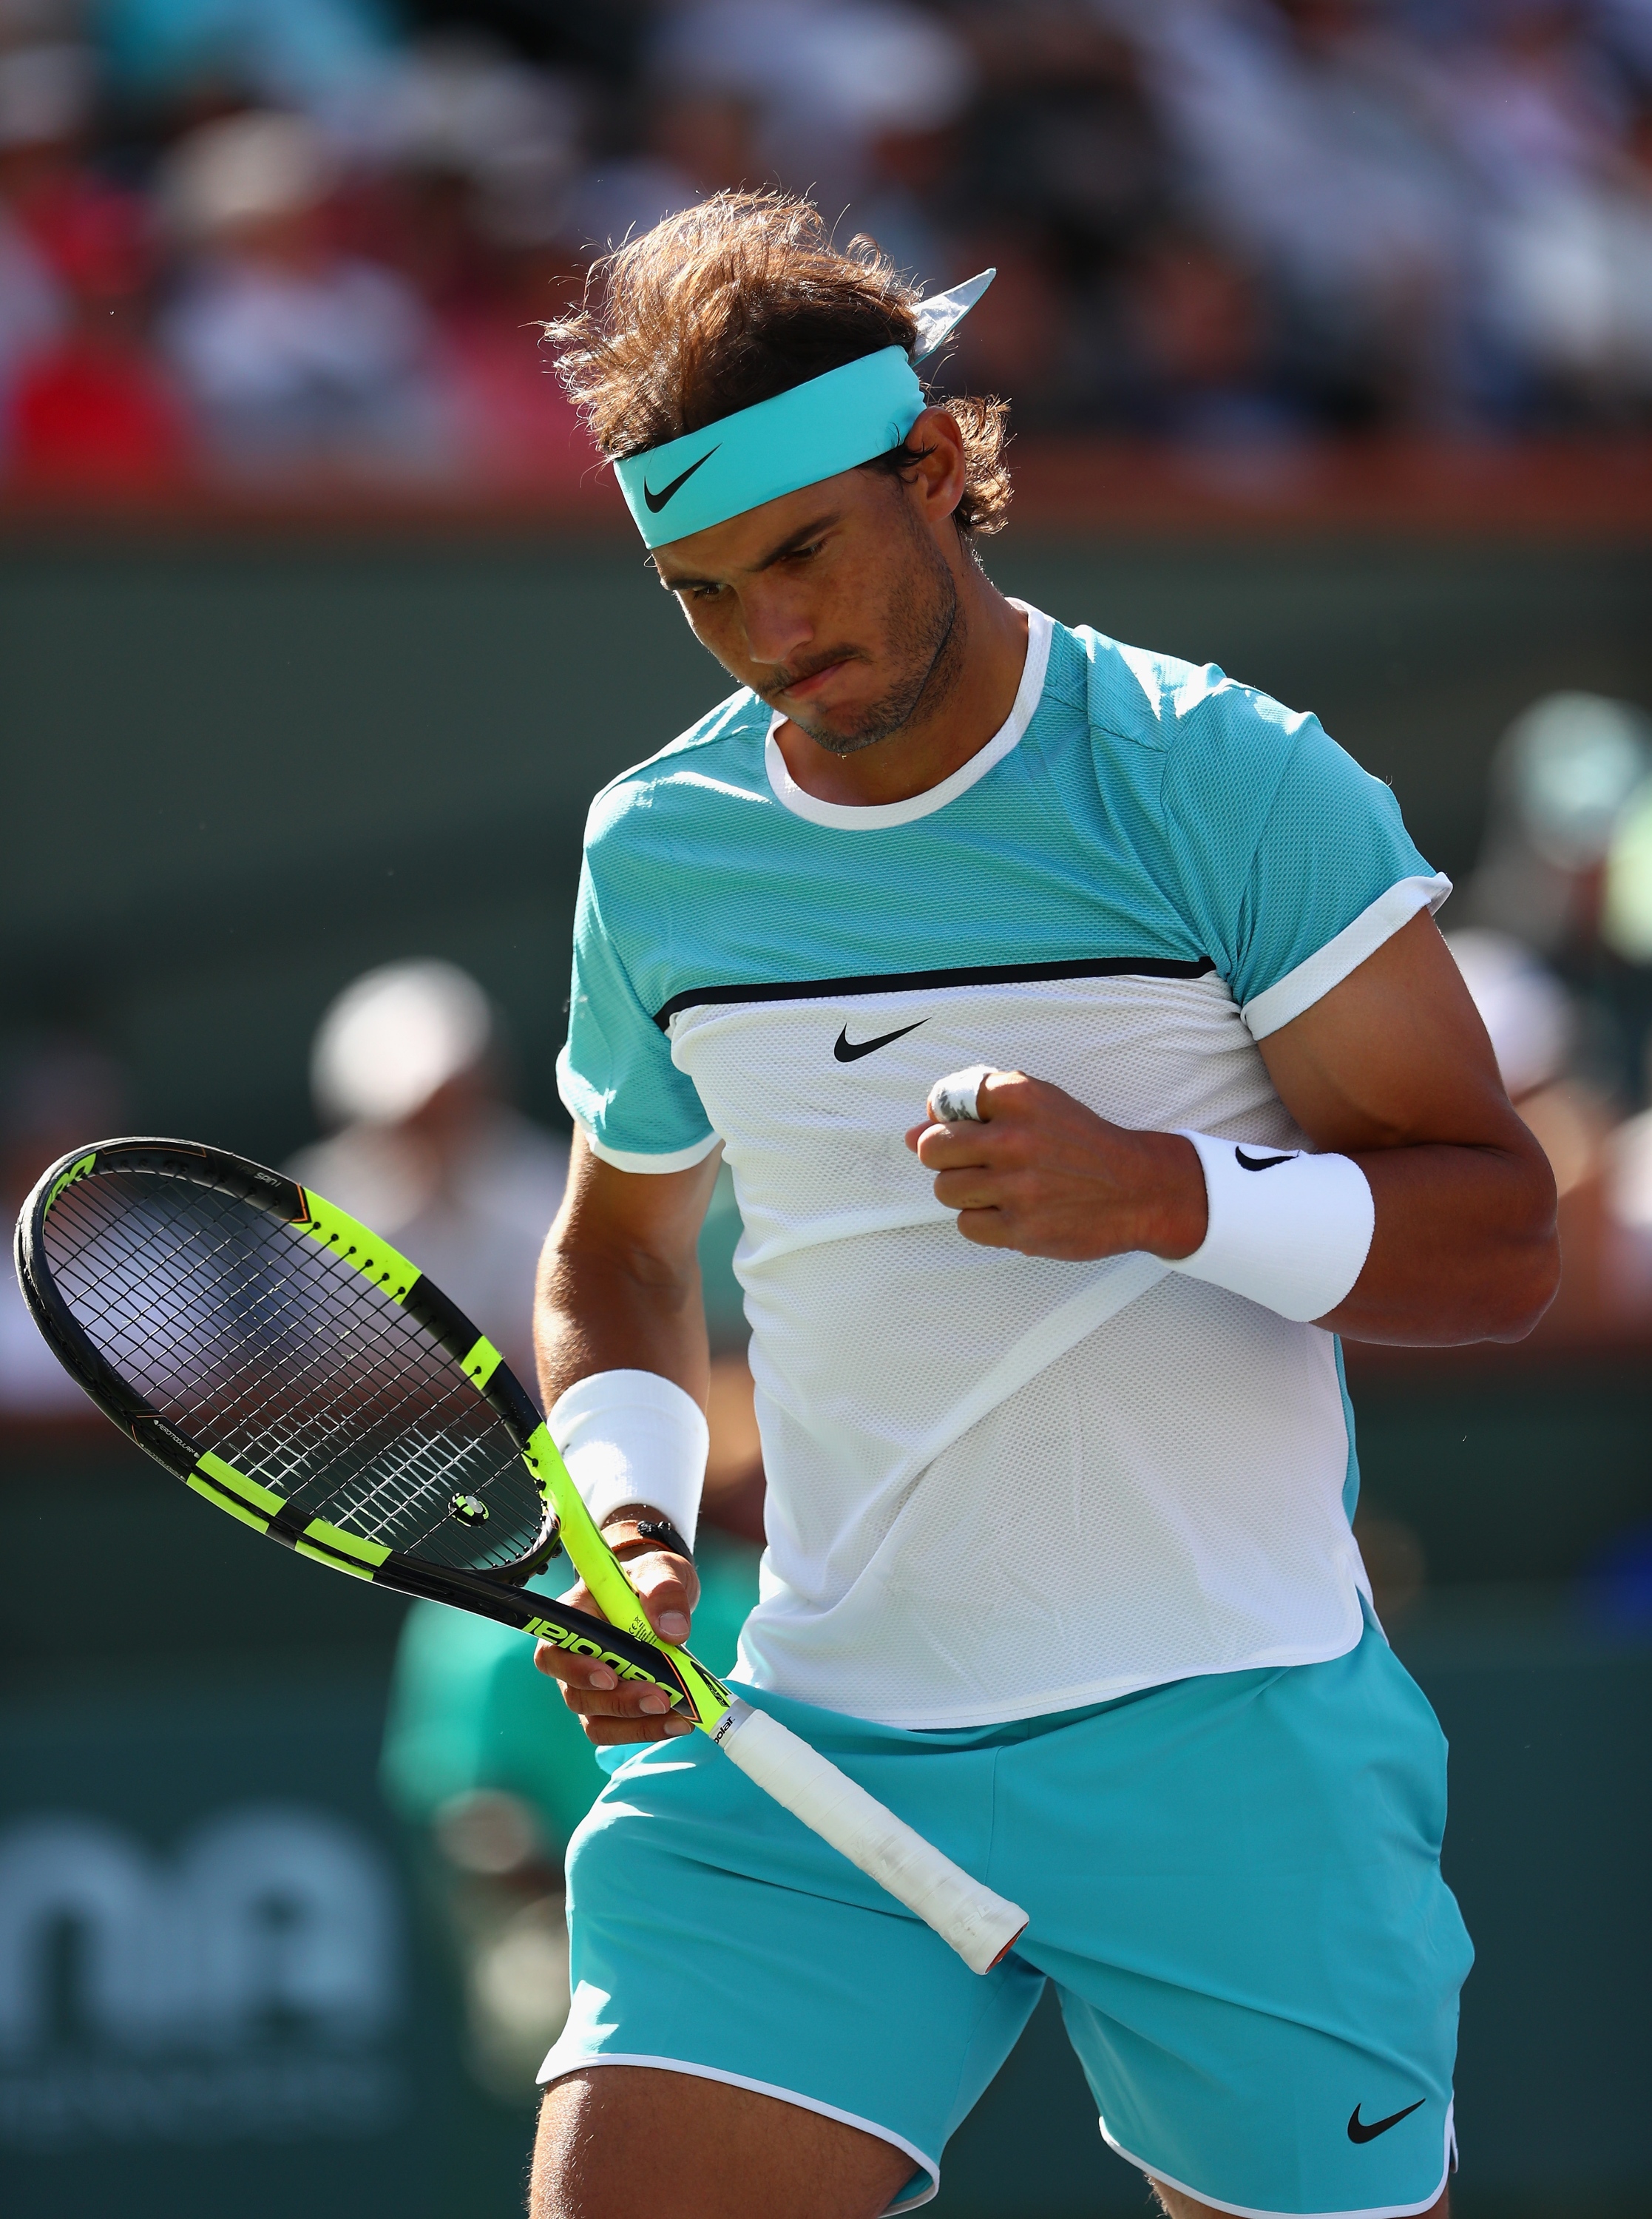 Rafael Nadal reaches Indian Wells fourth round [PHOTOS] – Rafael Nadal Fans